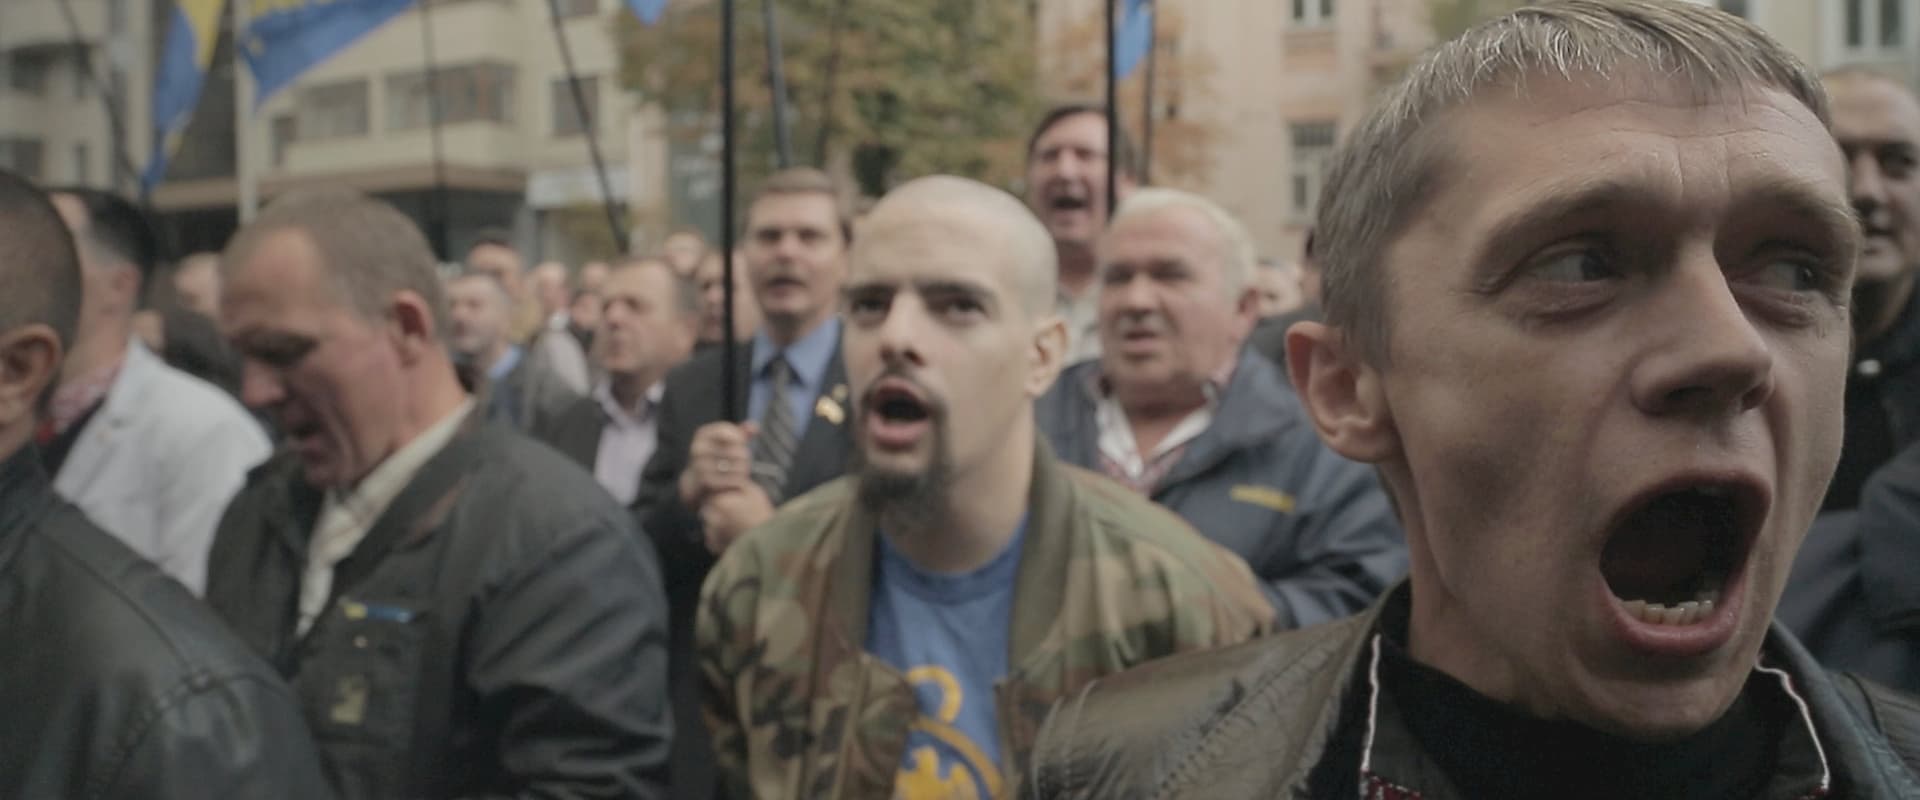 Ukraine: Masks of the Revolution